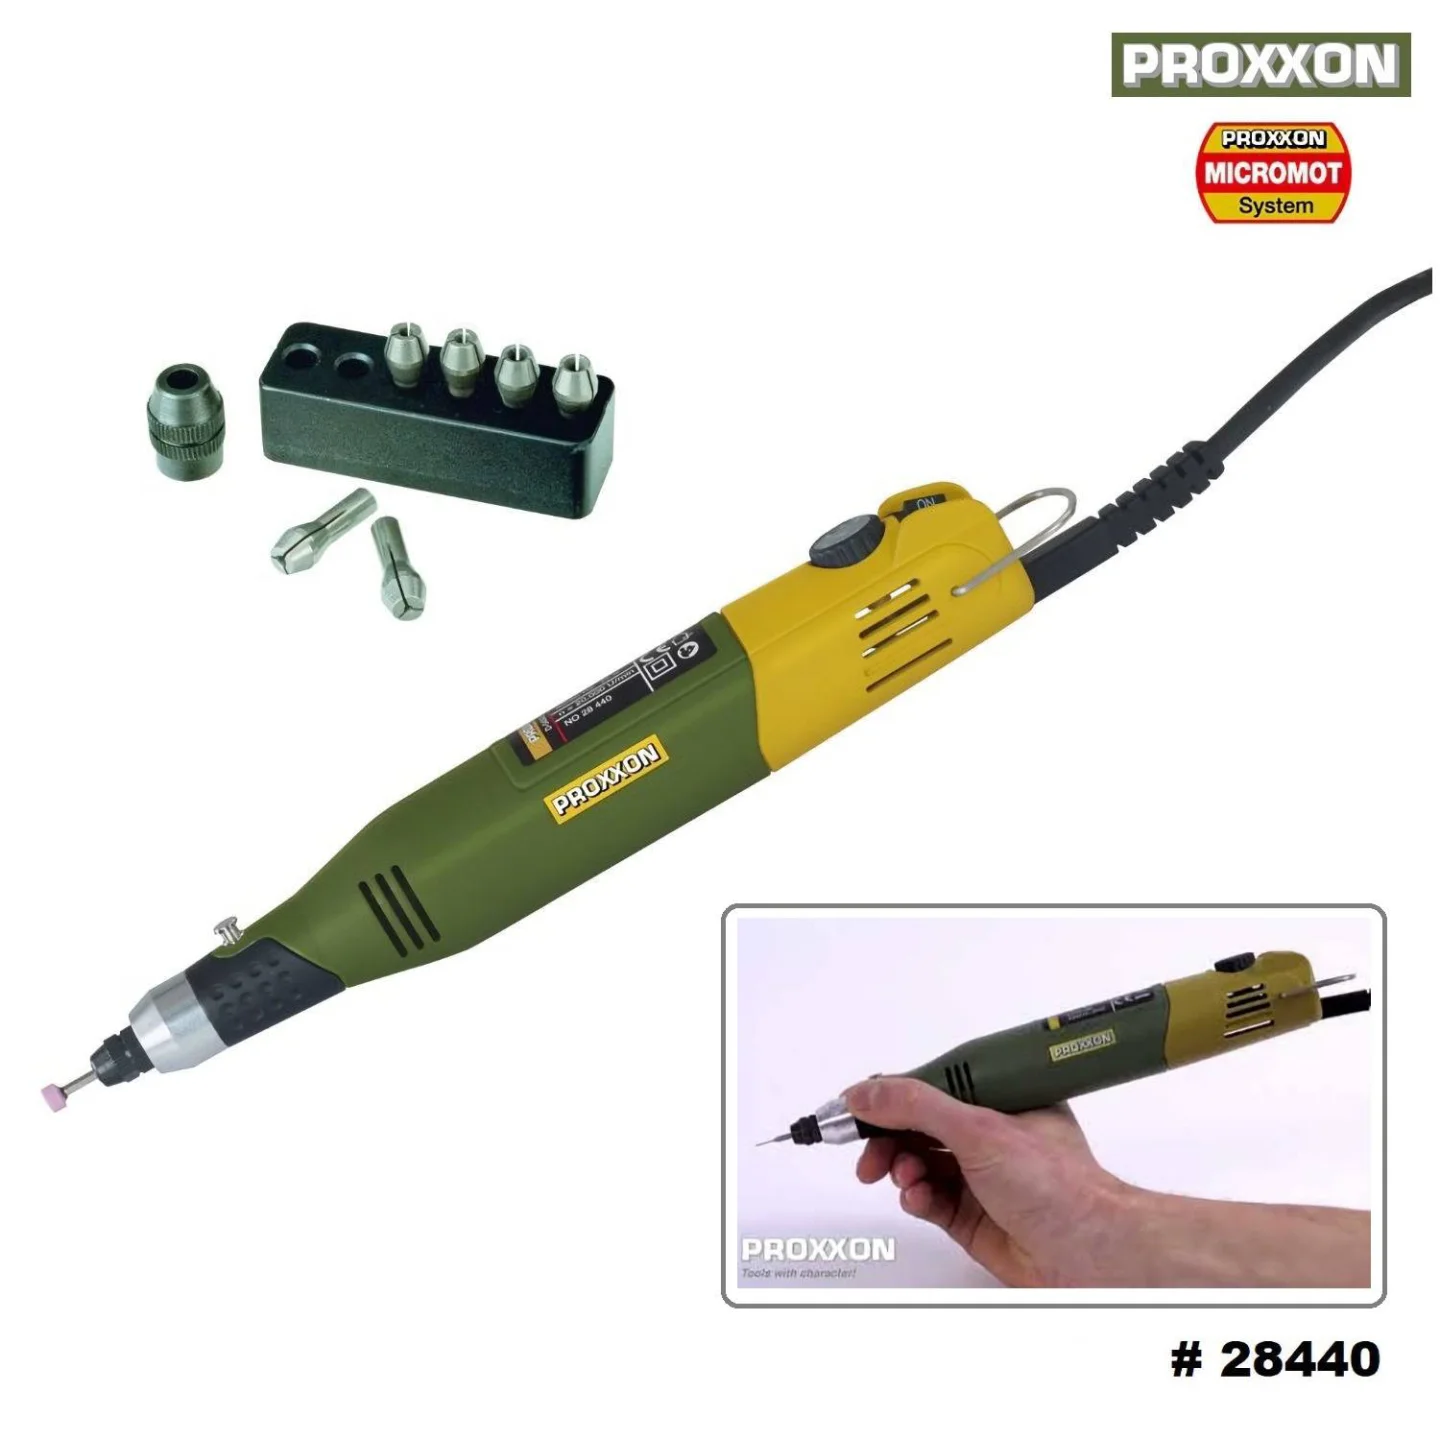 micromot-230E-Proxxon-28440.